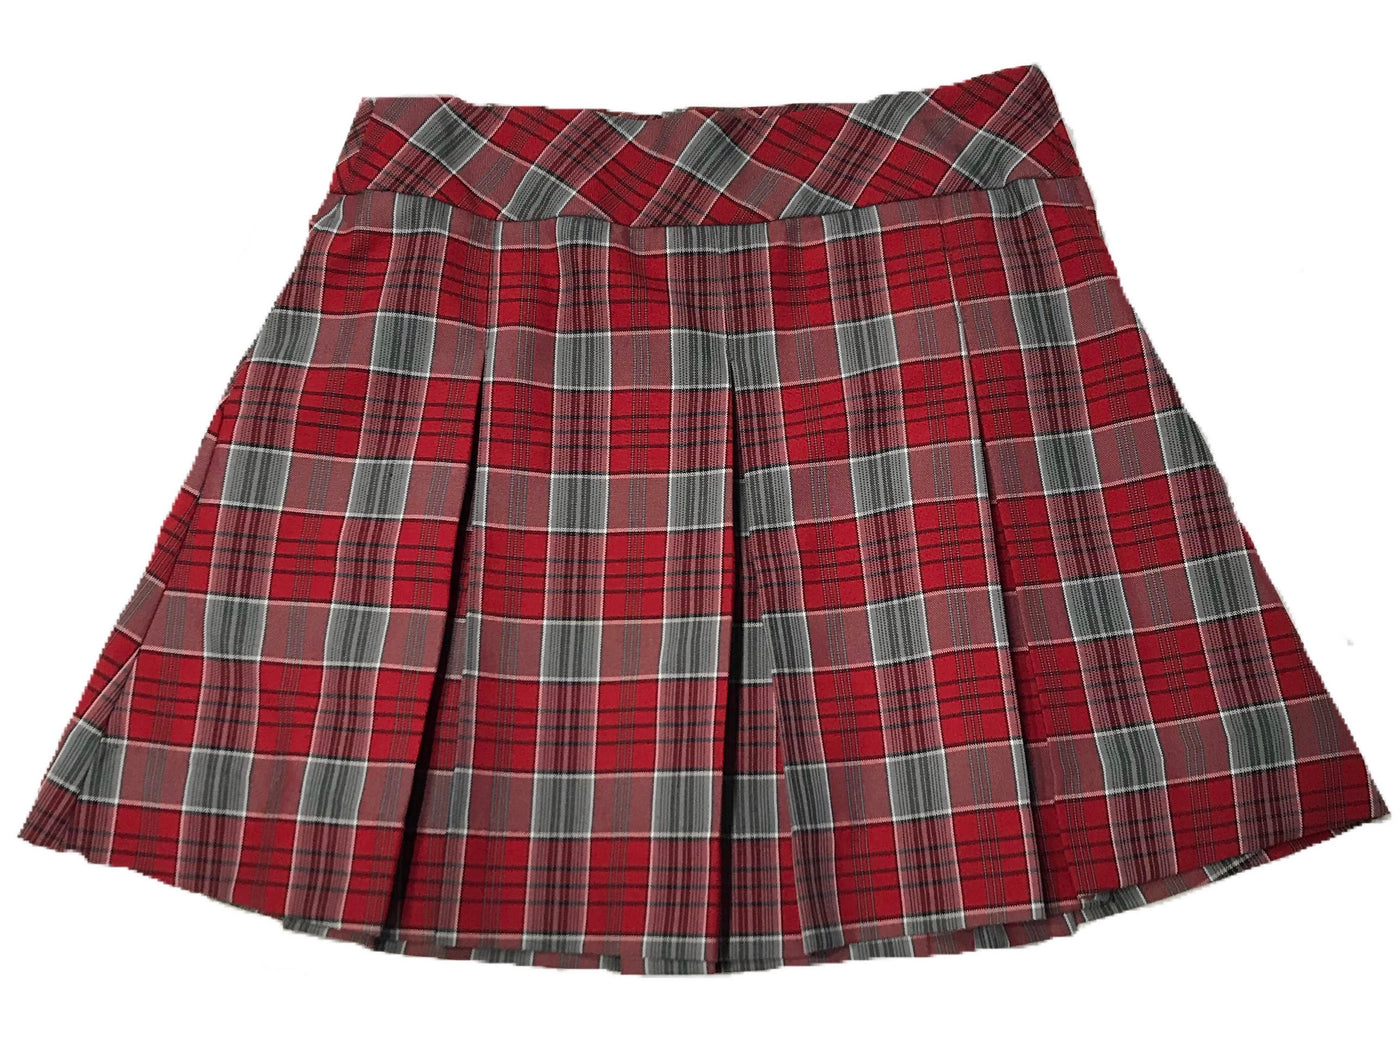 CCHS plaid skirt